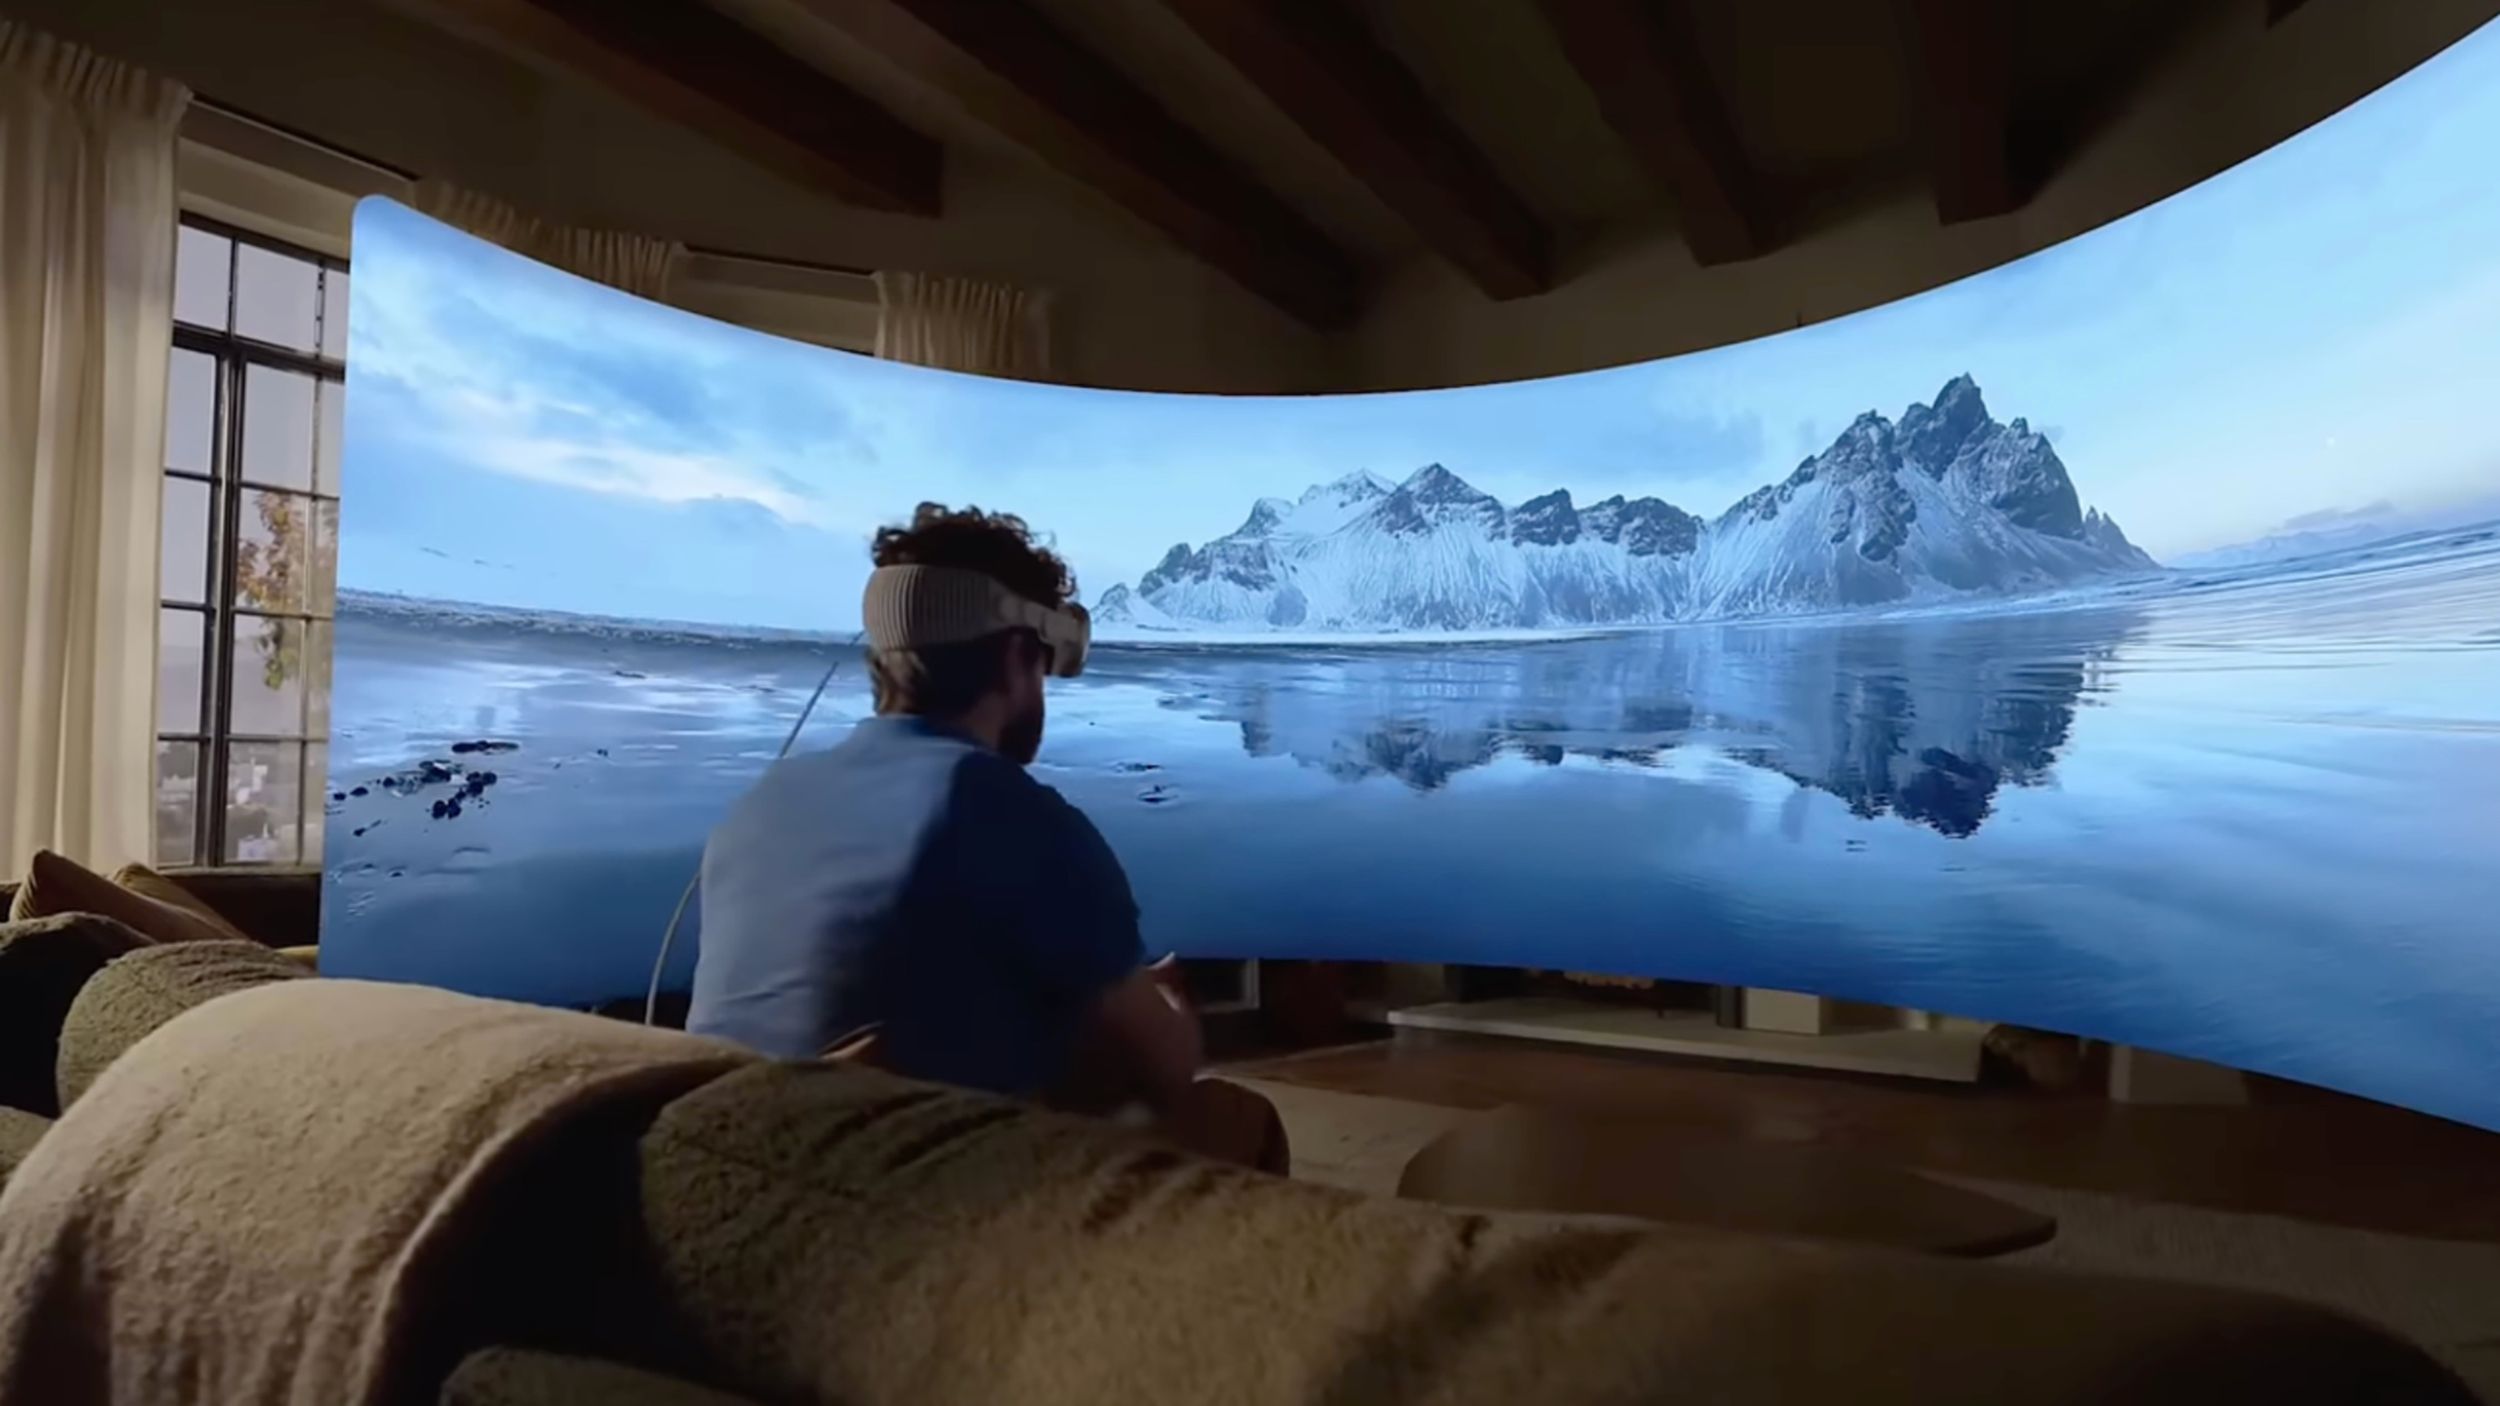 Virtual cinema experience Micro-OLED displays for each eye